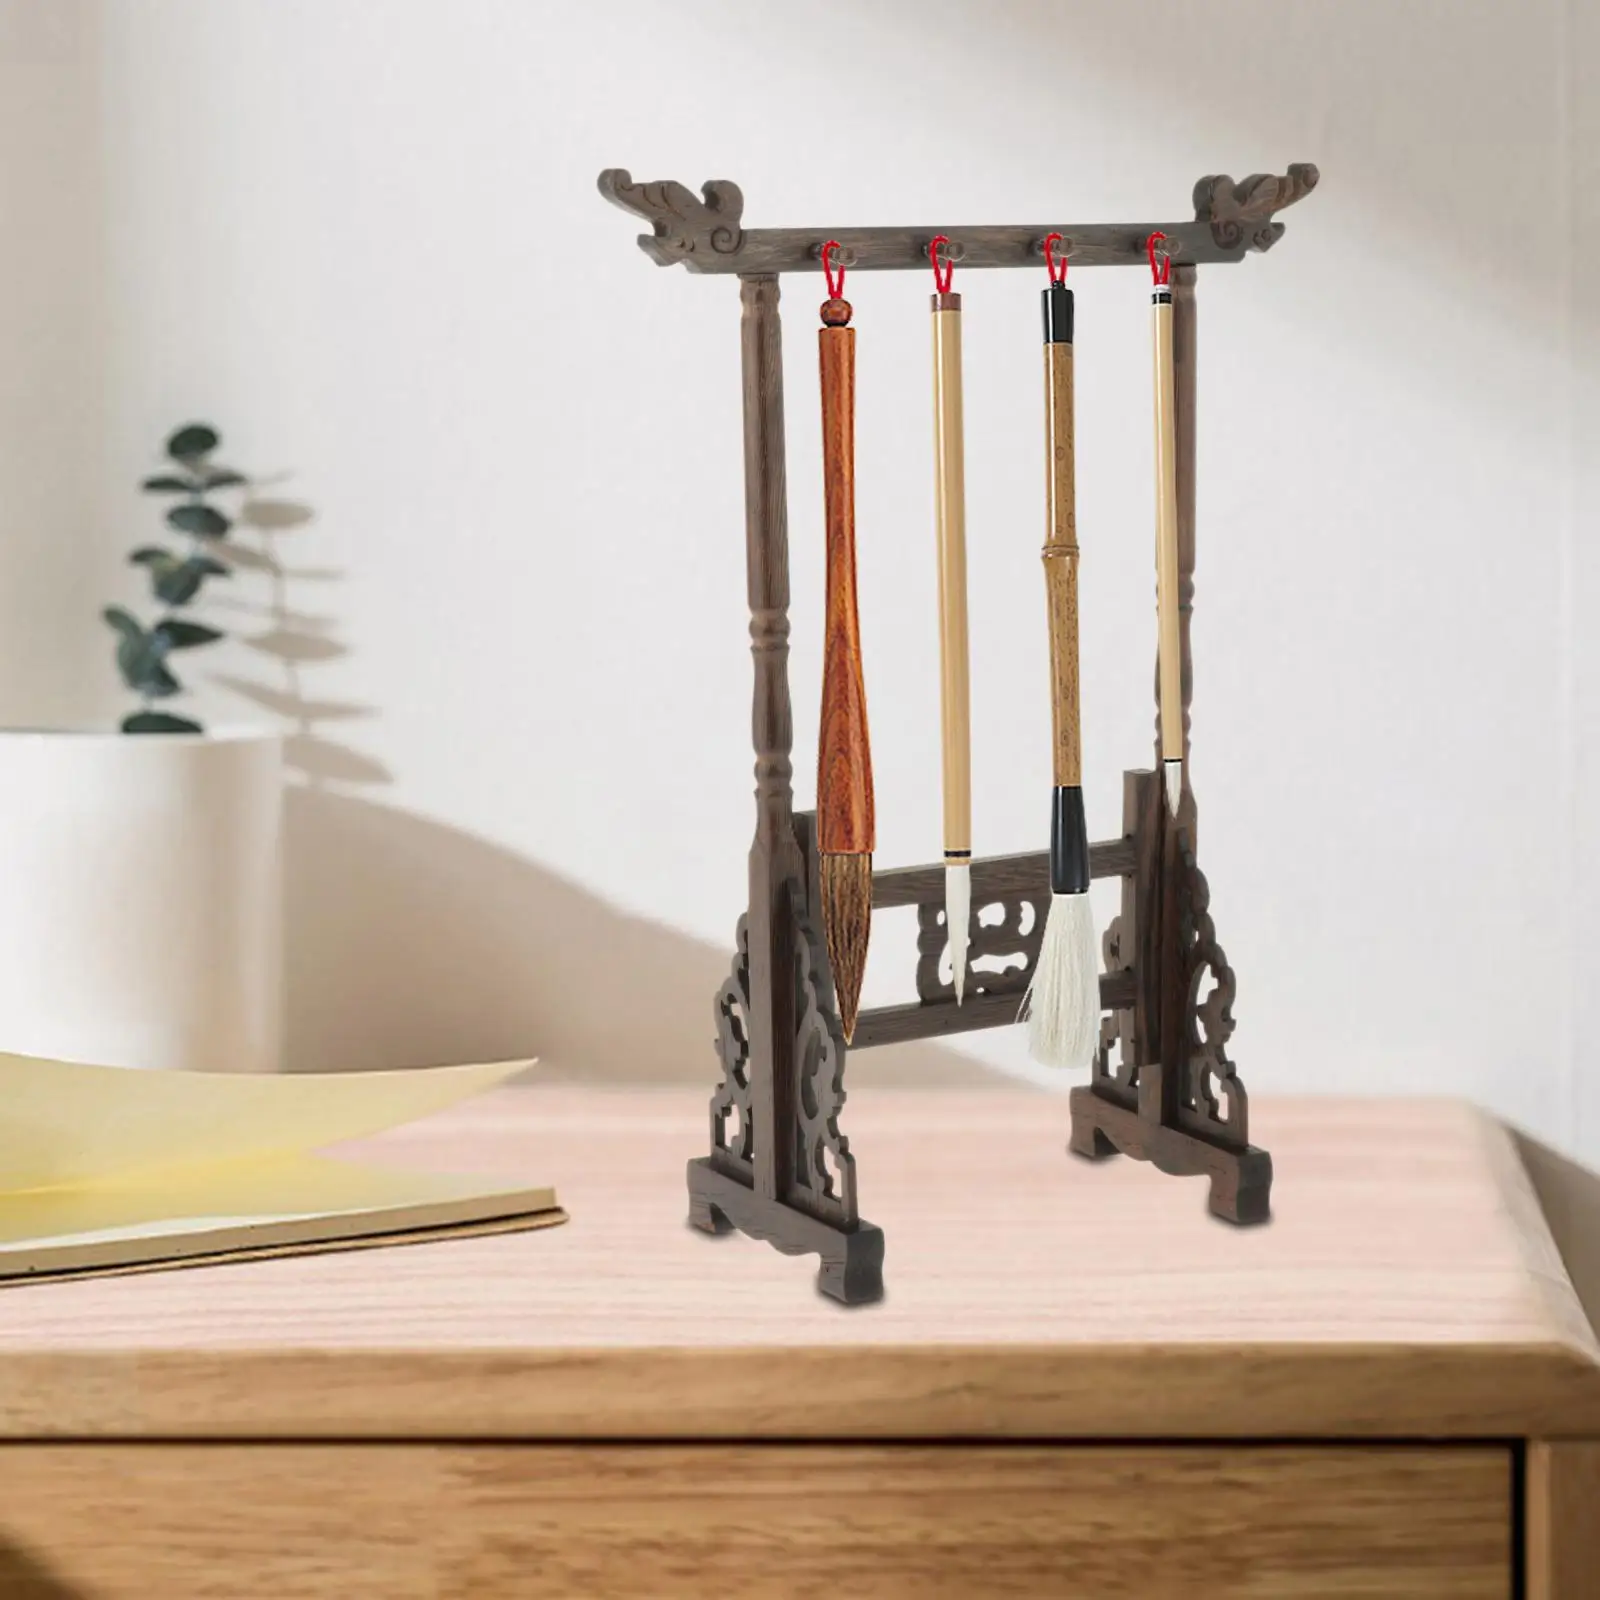 Chinese Writing Pen Brush Hanging Rack Wood Carving Accessories Assembled Size 17.5Cmx10Cmx37cm Exquisite Artwork Elegant